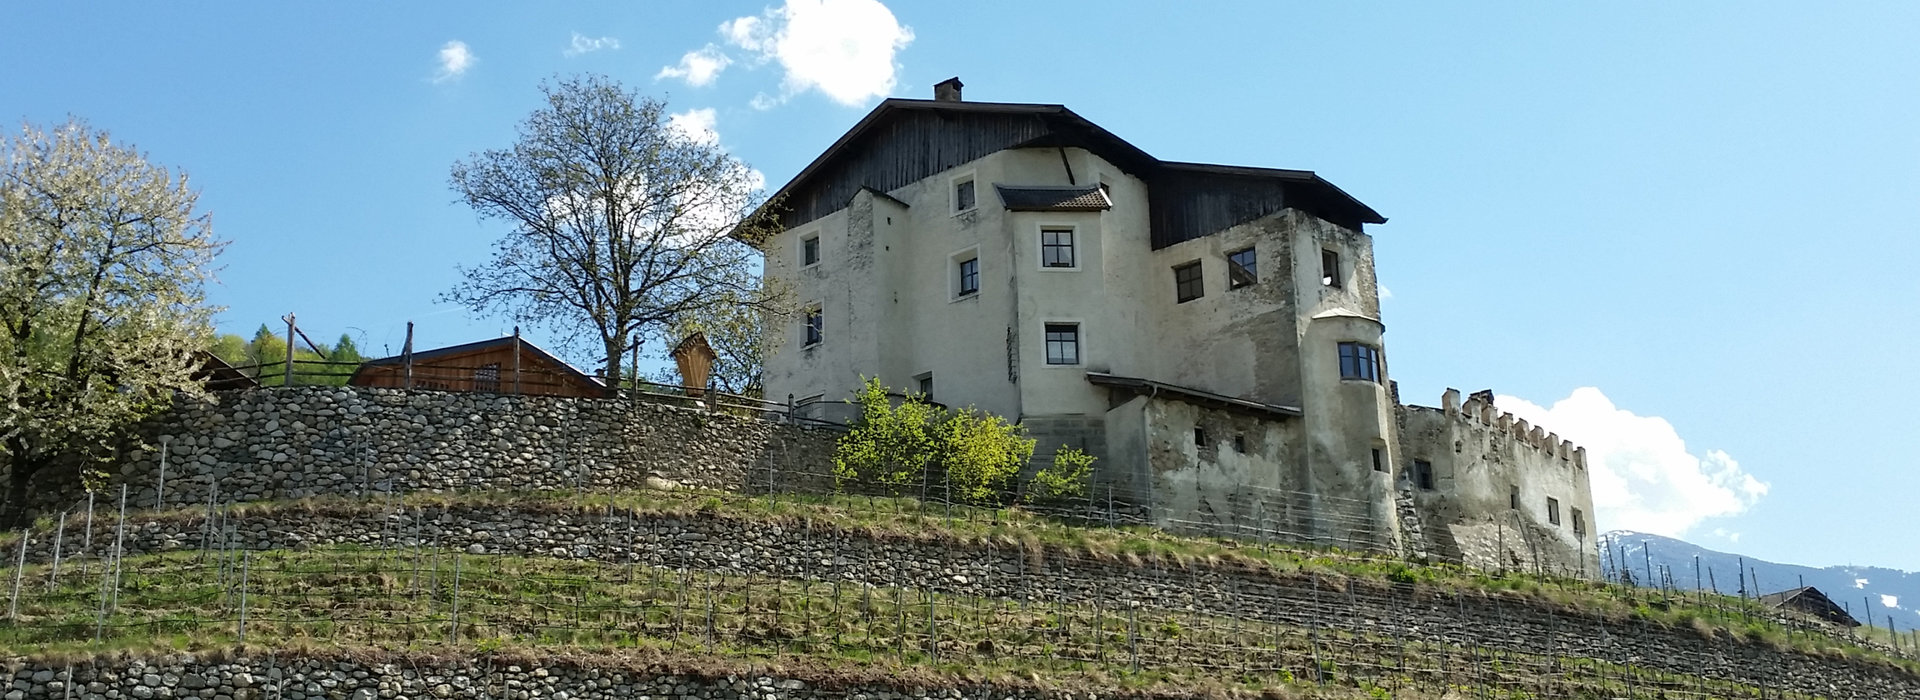 Heimatpflegeverband Südtirol